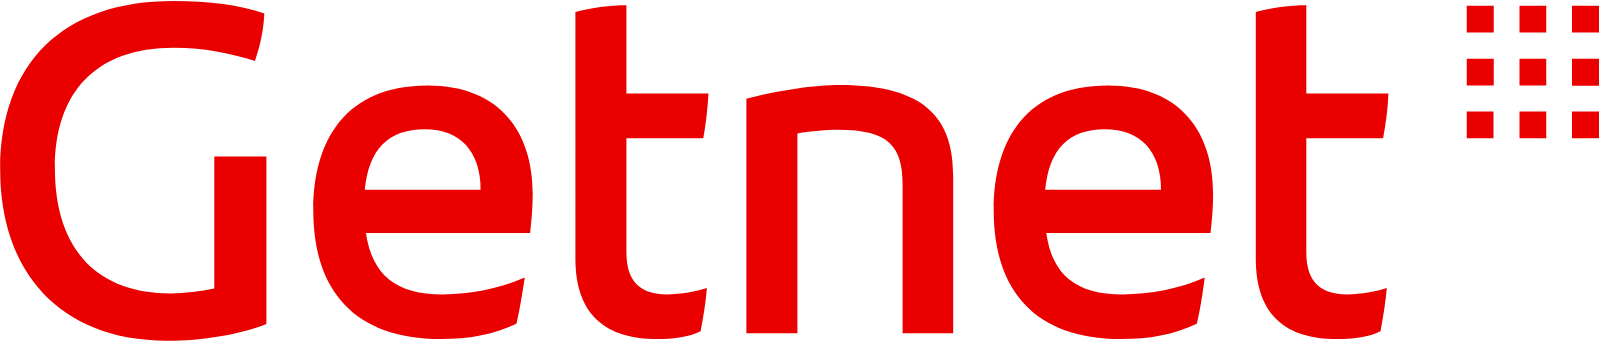 Logo de empresa Getnet.